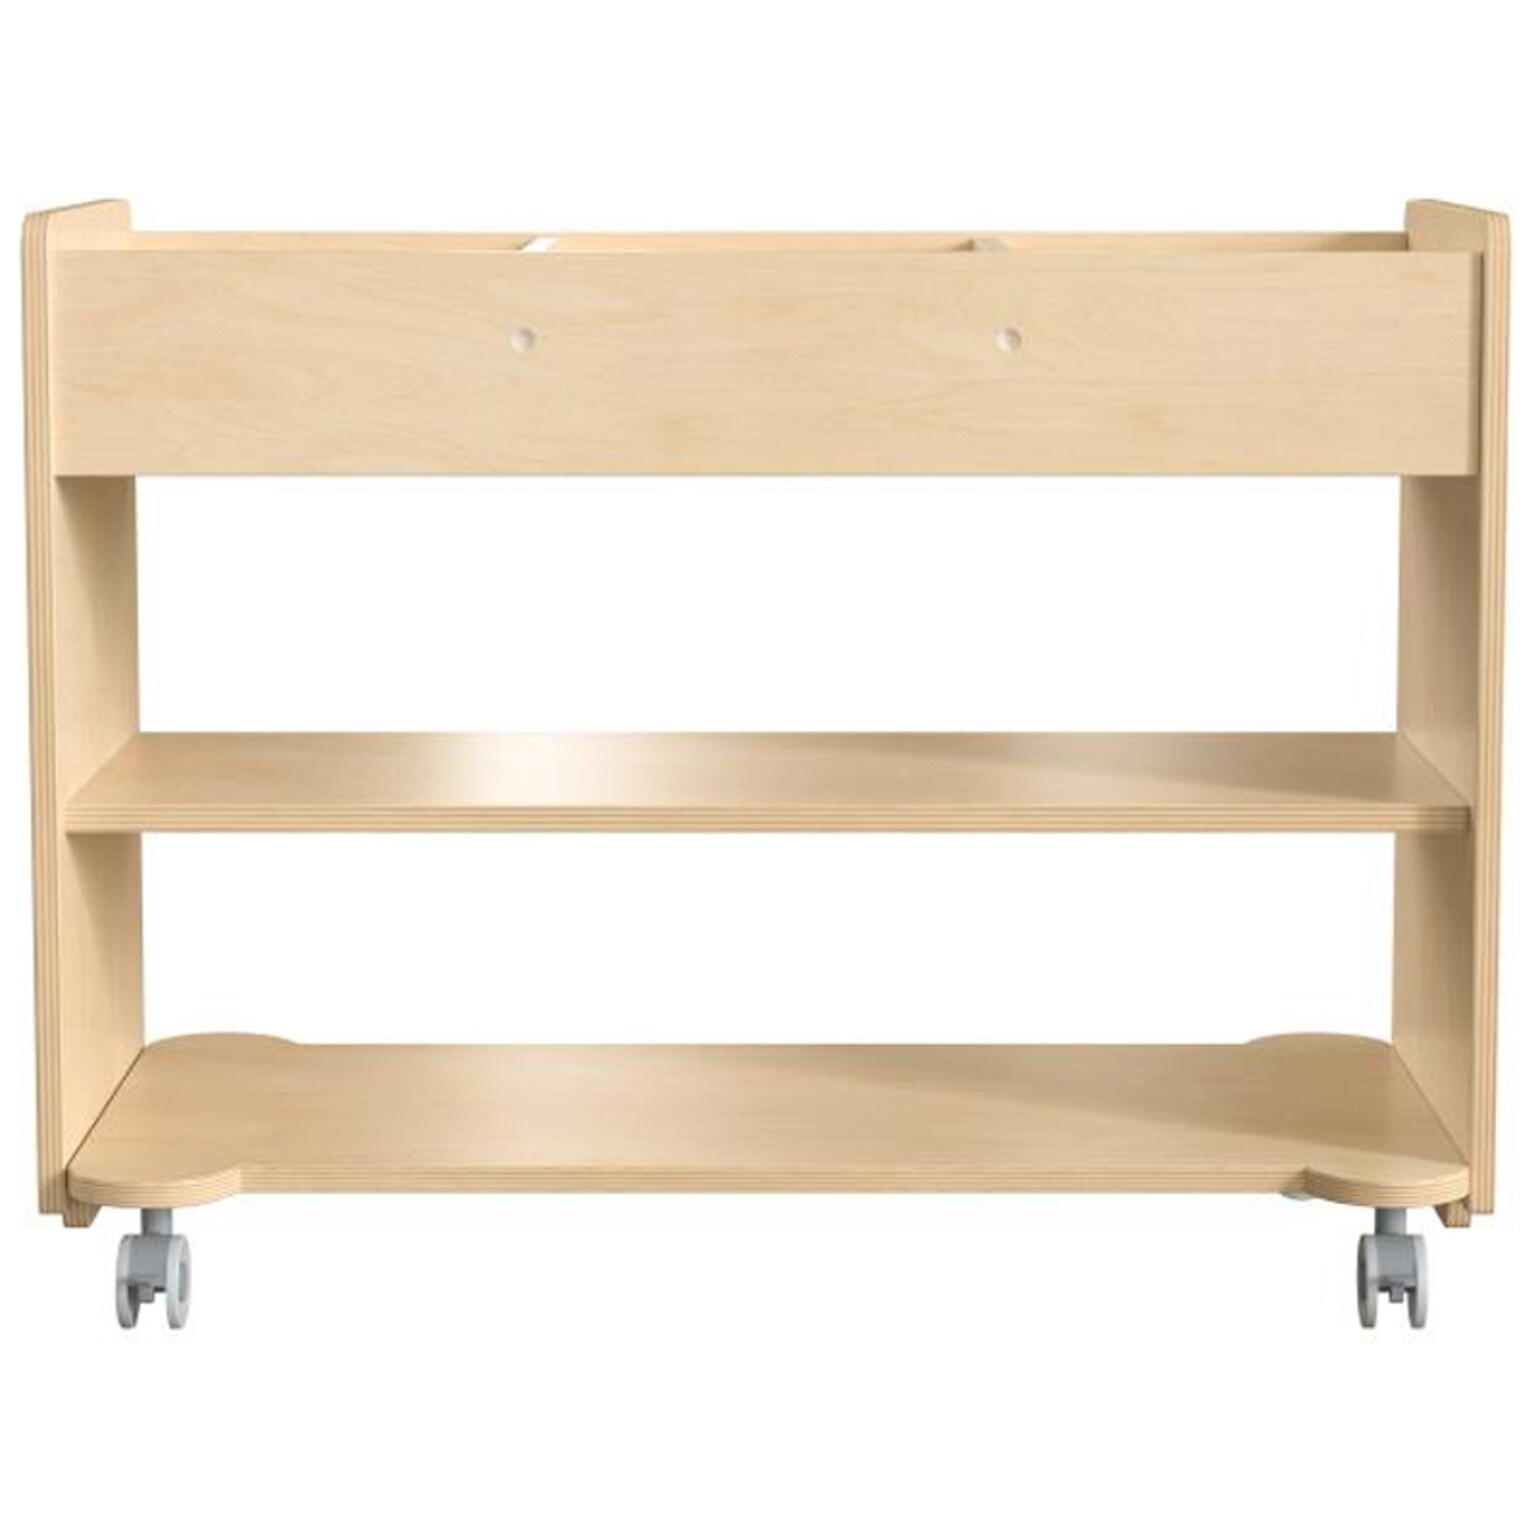 Flash Furniture Bright Beginnings Mobile 5-Section Storage Cart, 24.5H x 31W x 16D, Natural Birch Plywood (MK-KE24145-GG)